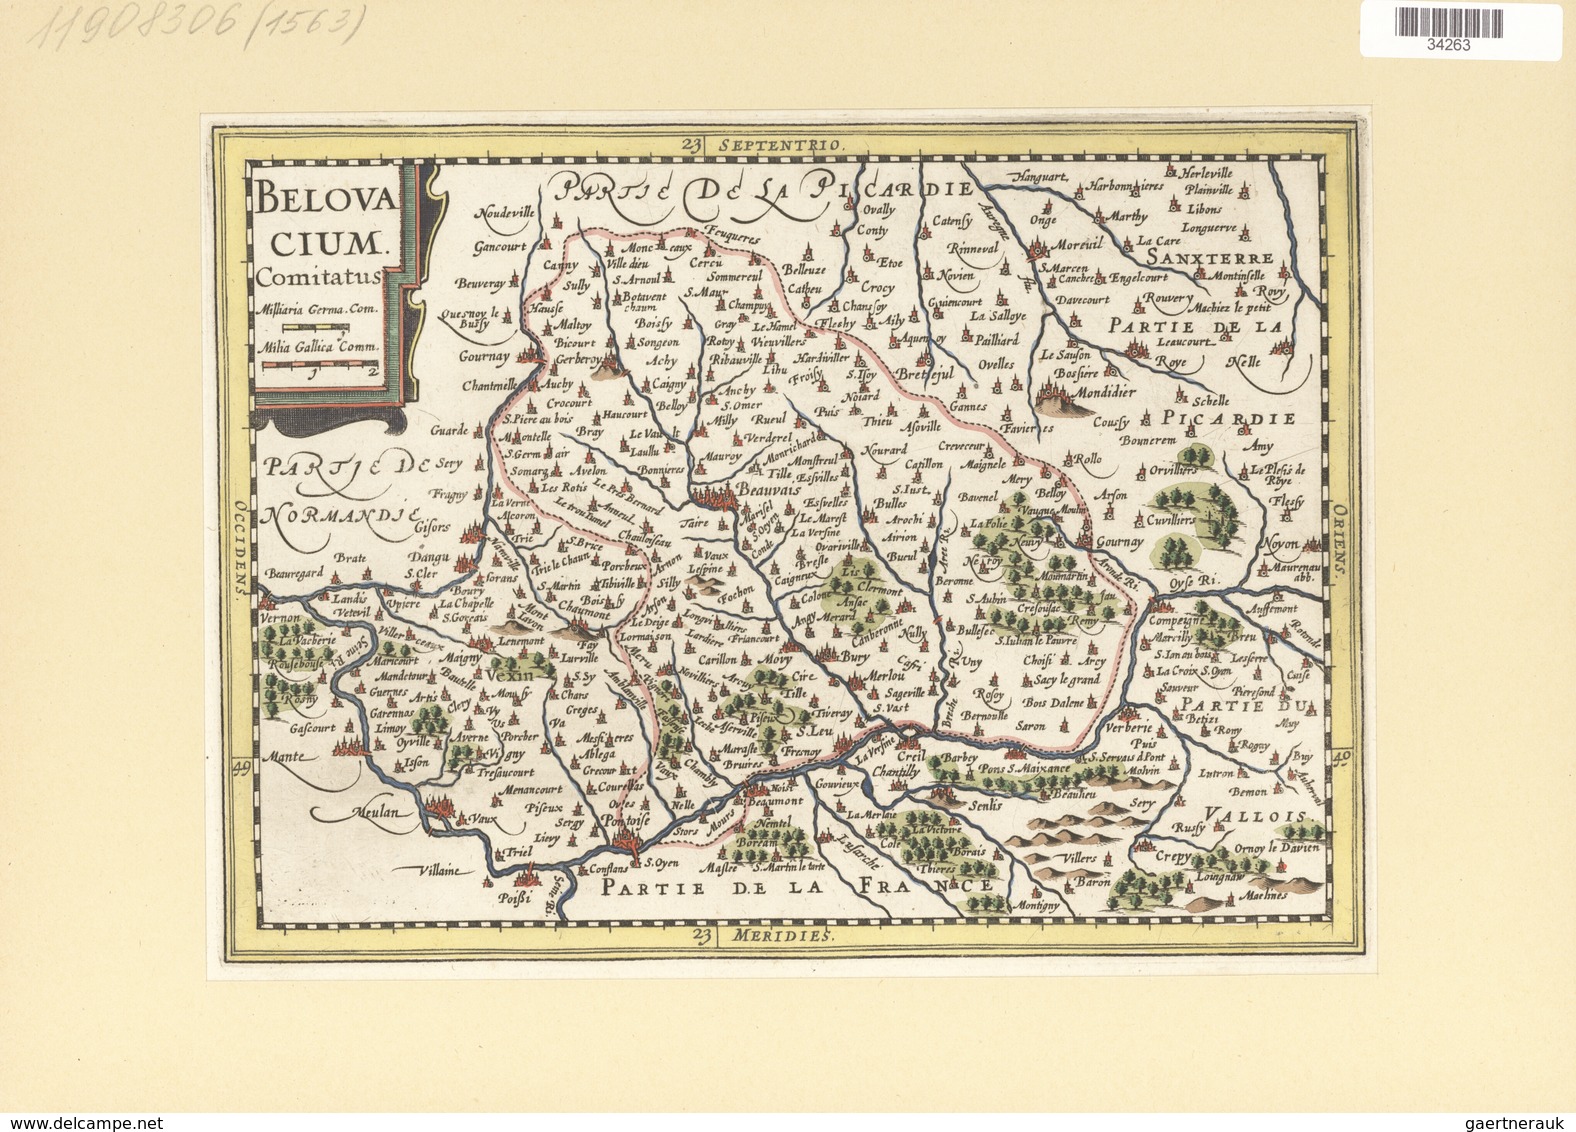 Landkarten Und Stiche: 1734. Belovacium Comitatus. From The Mercator Atlas Minor Ca 1648, Later Alte - Aardrijkskunde